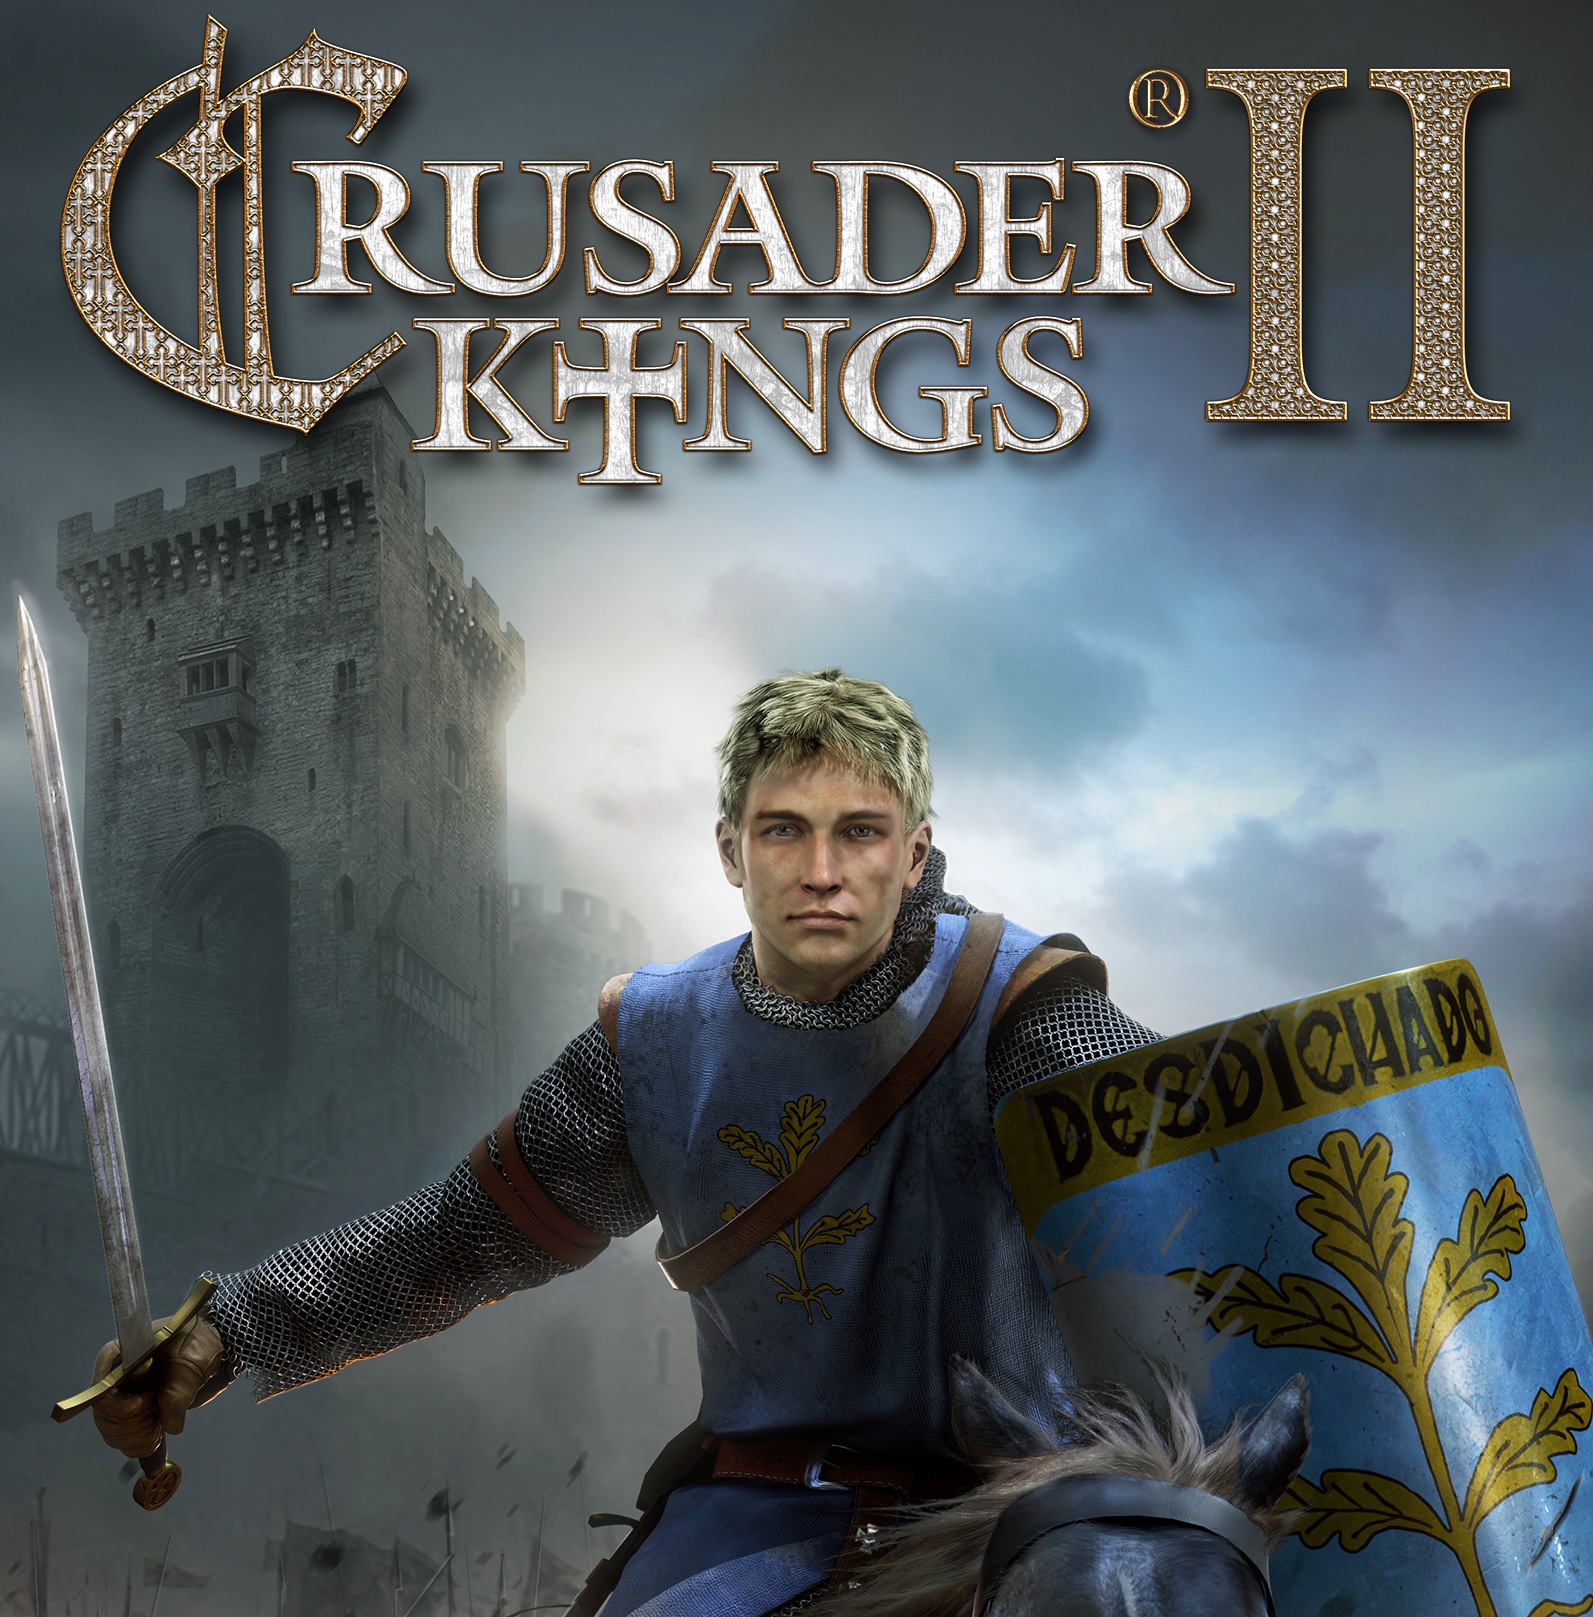 Crusader kings 2 3.3. Crusader Kings 2. Крусейдер Кингс 2 обложка. Крусайдер Кинг. Crusader Kings II обложка.